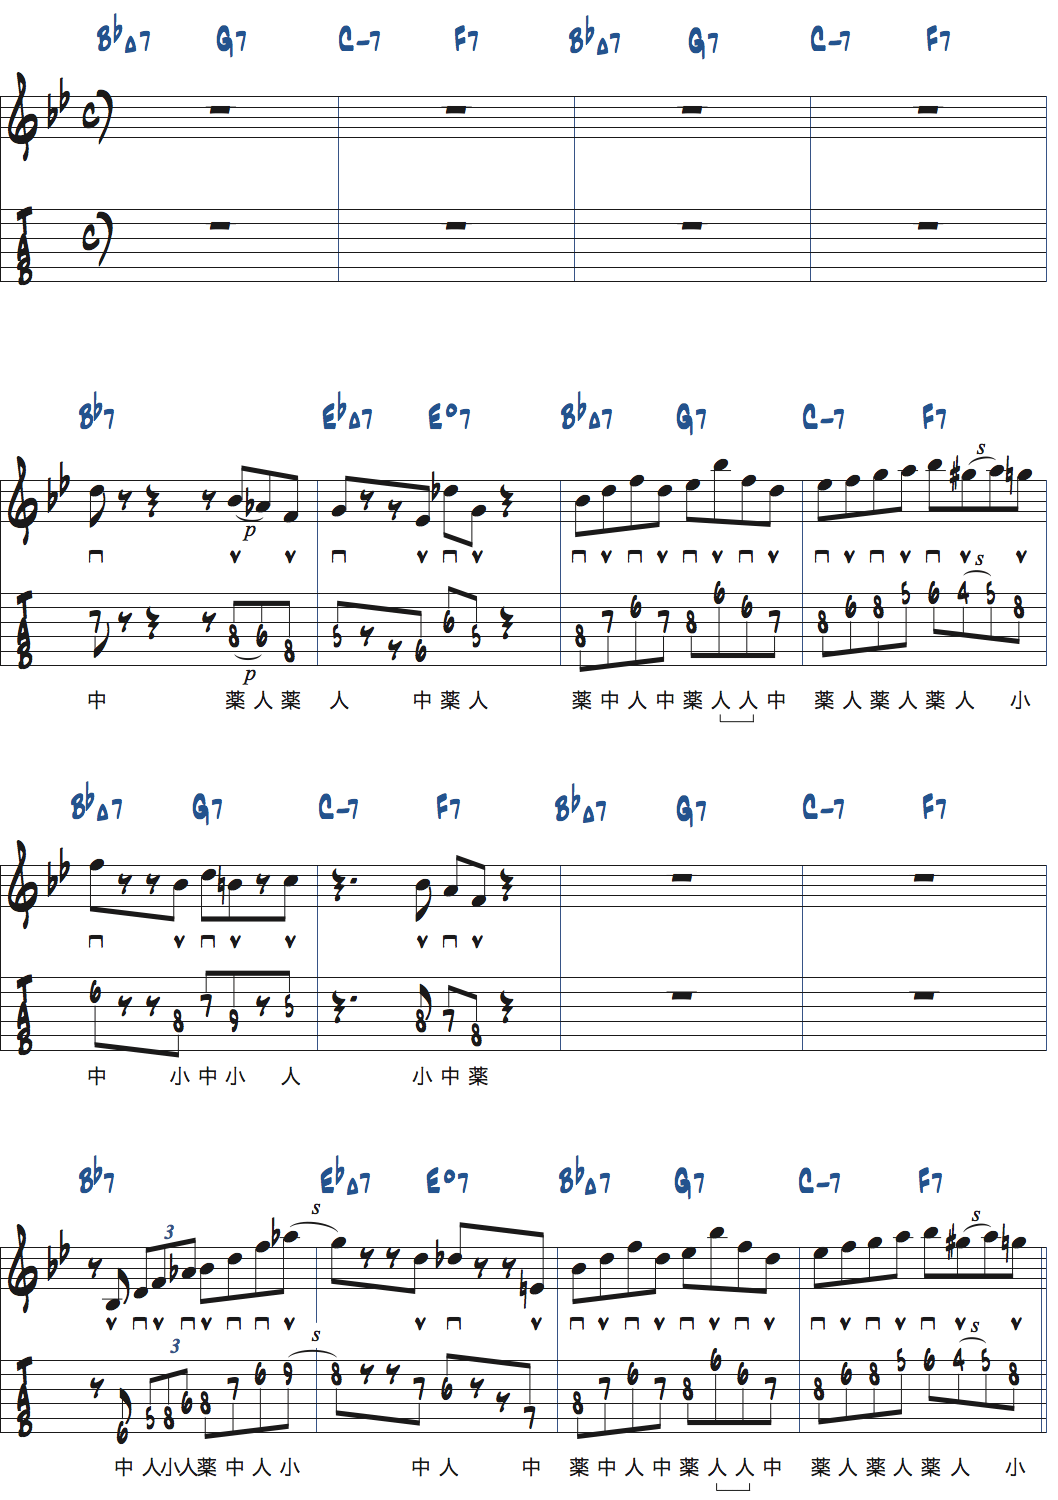 BbメジャーI-VI-II-Vポジション4リック3の前後のコードトーンのリズムを変えて弾く練習楽譜